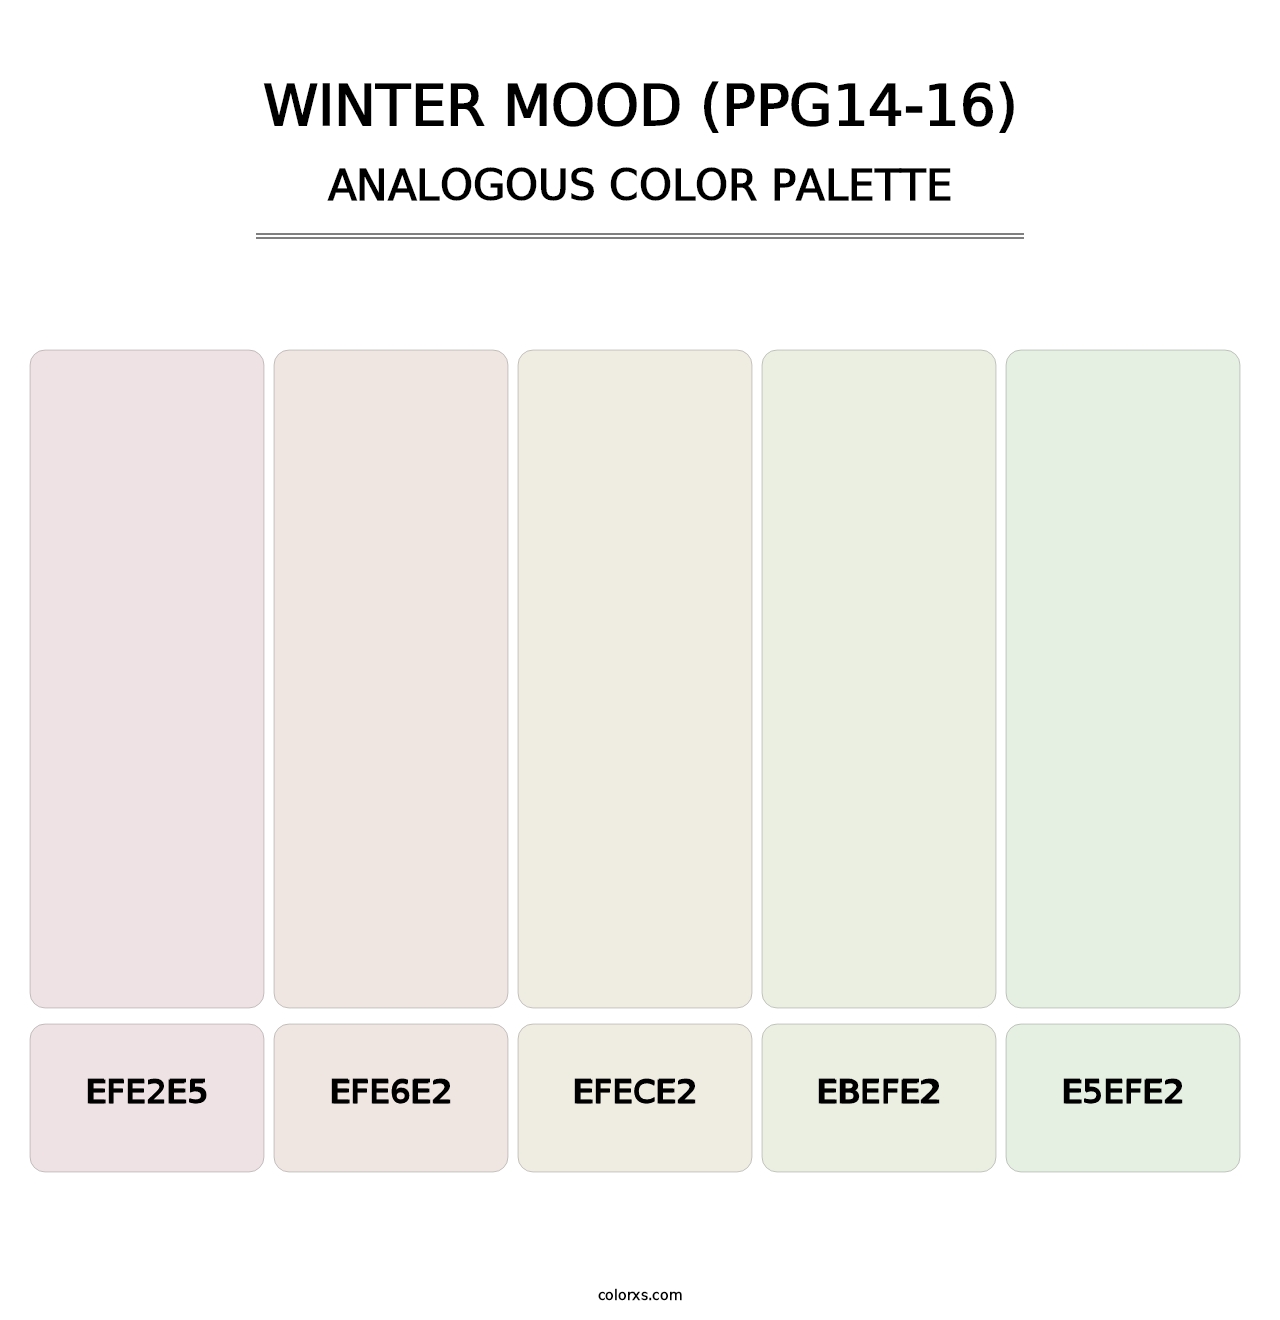 Winter Mood (PPG14-16) - Analogous Color Palette